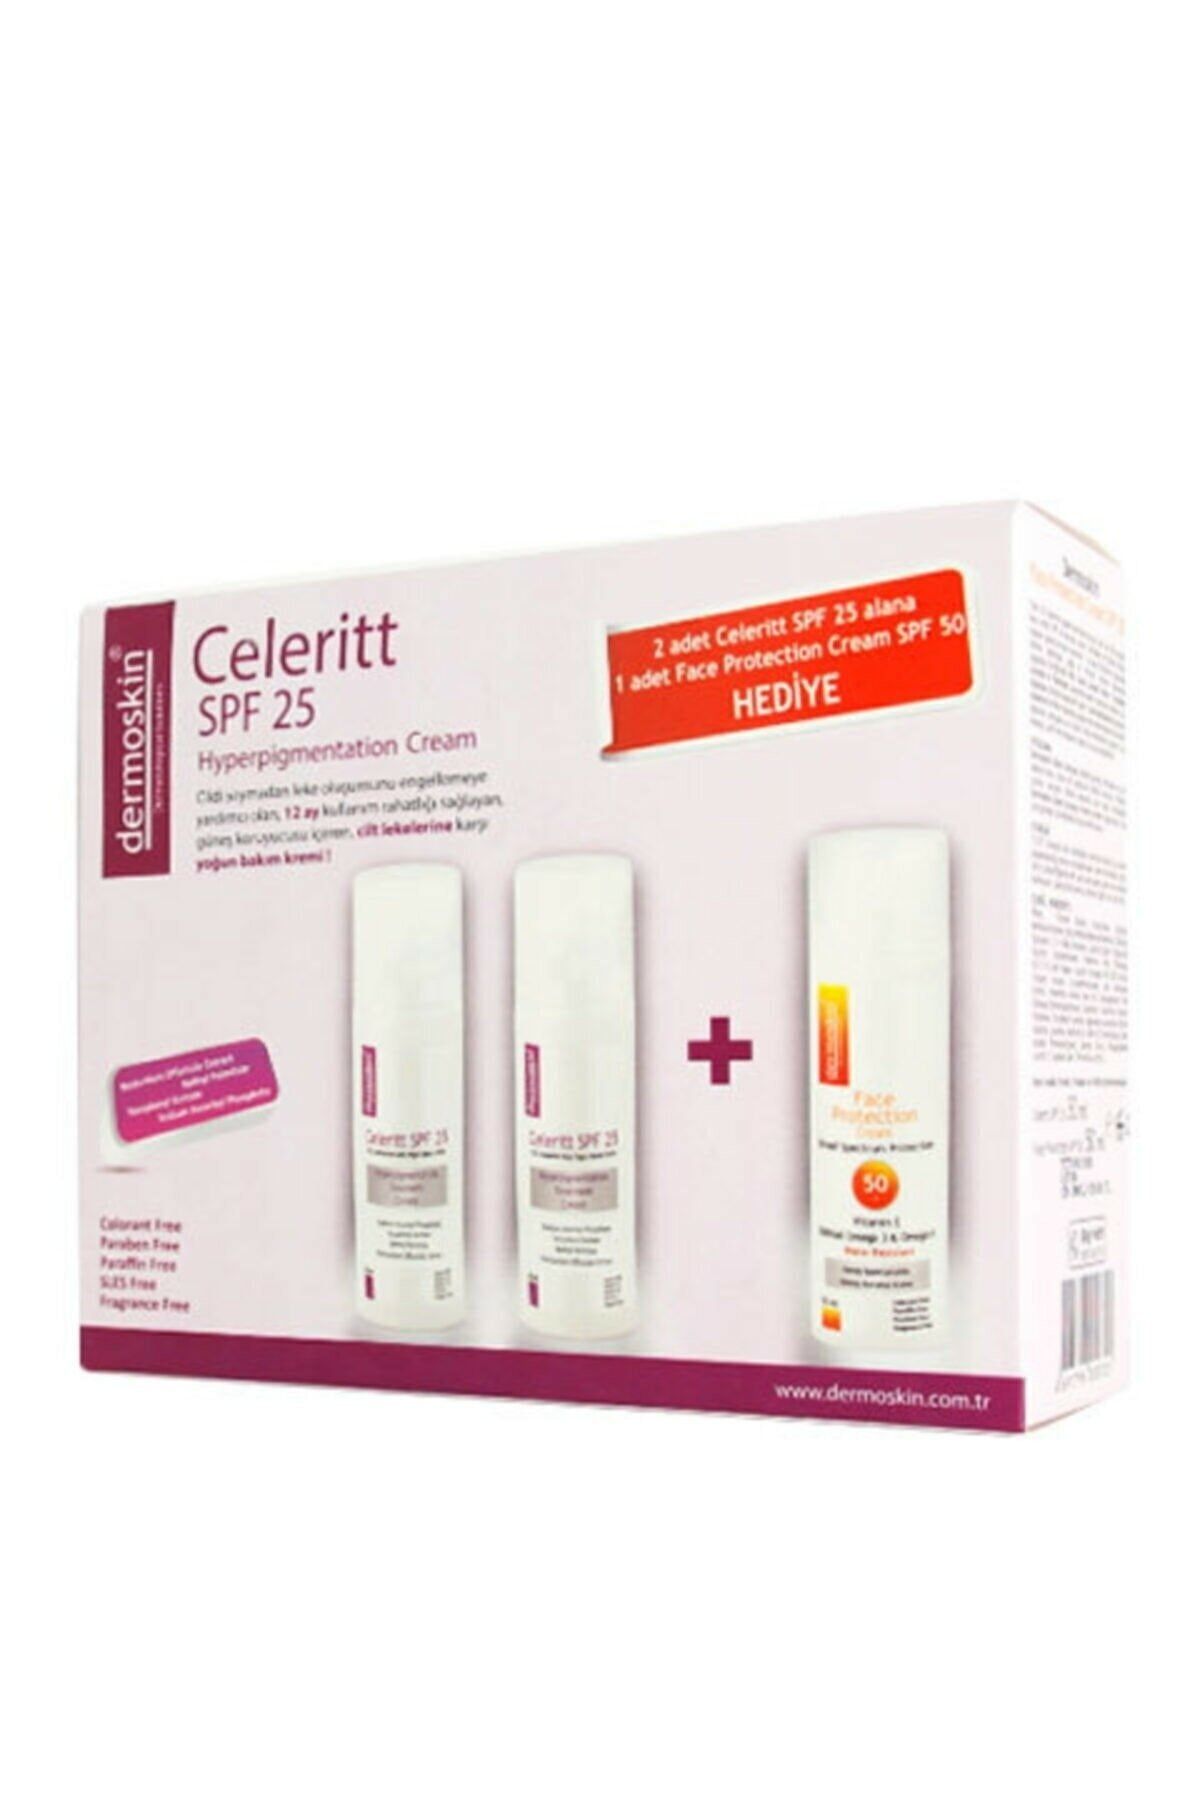 Dermoskin Celeritt Spf25 2x30ml + Face Protection Spf50 Cream 50ml Hediye